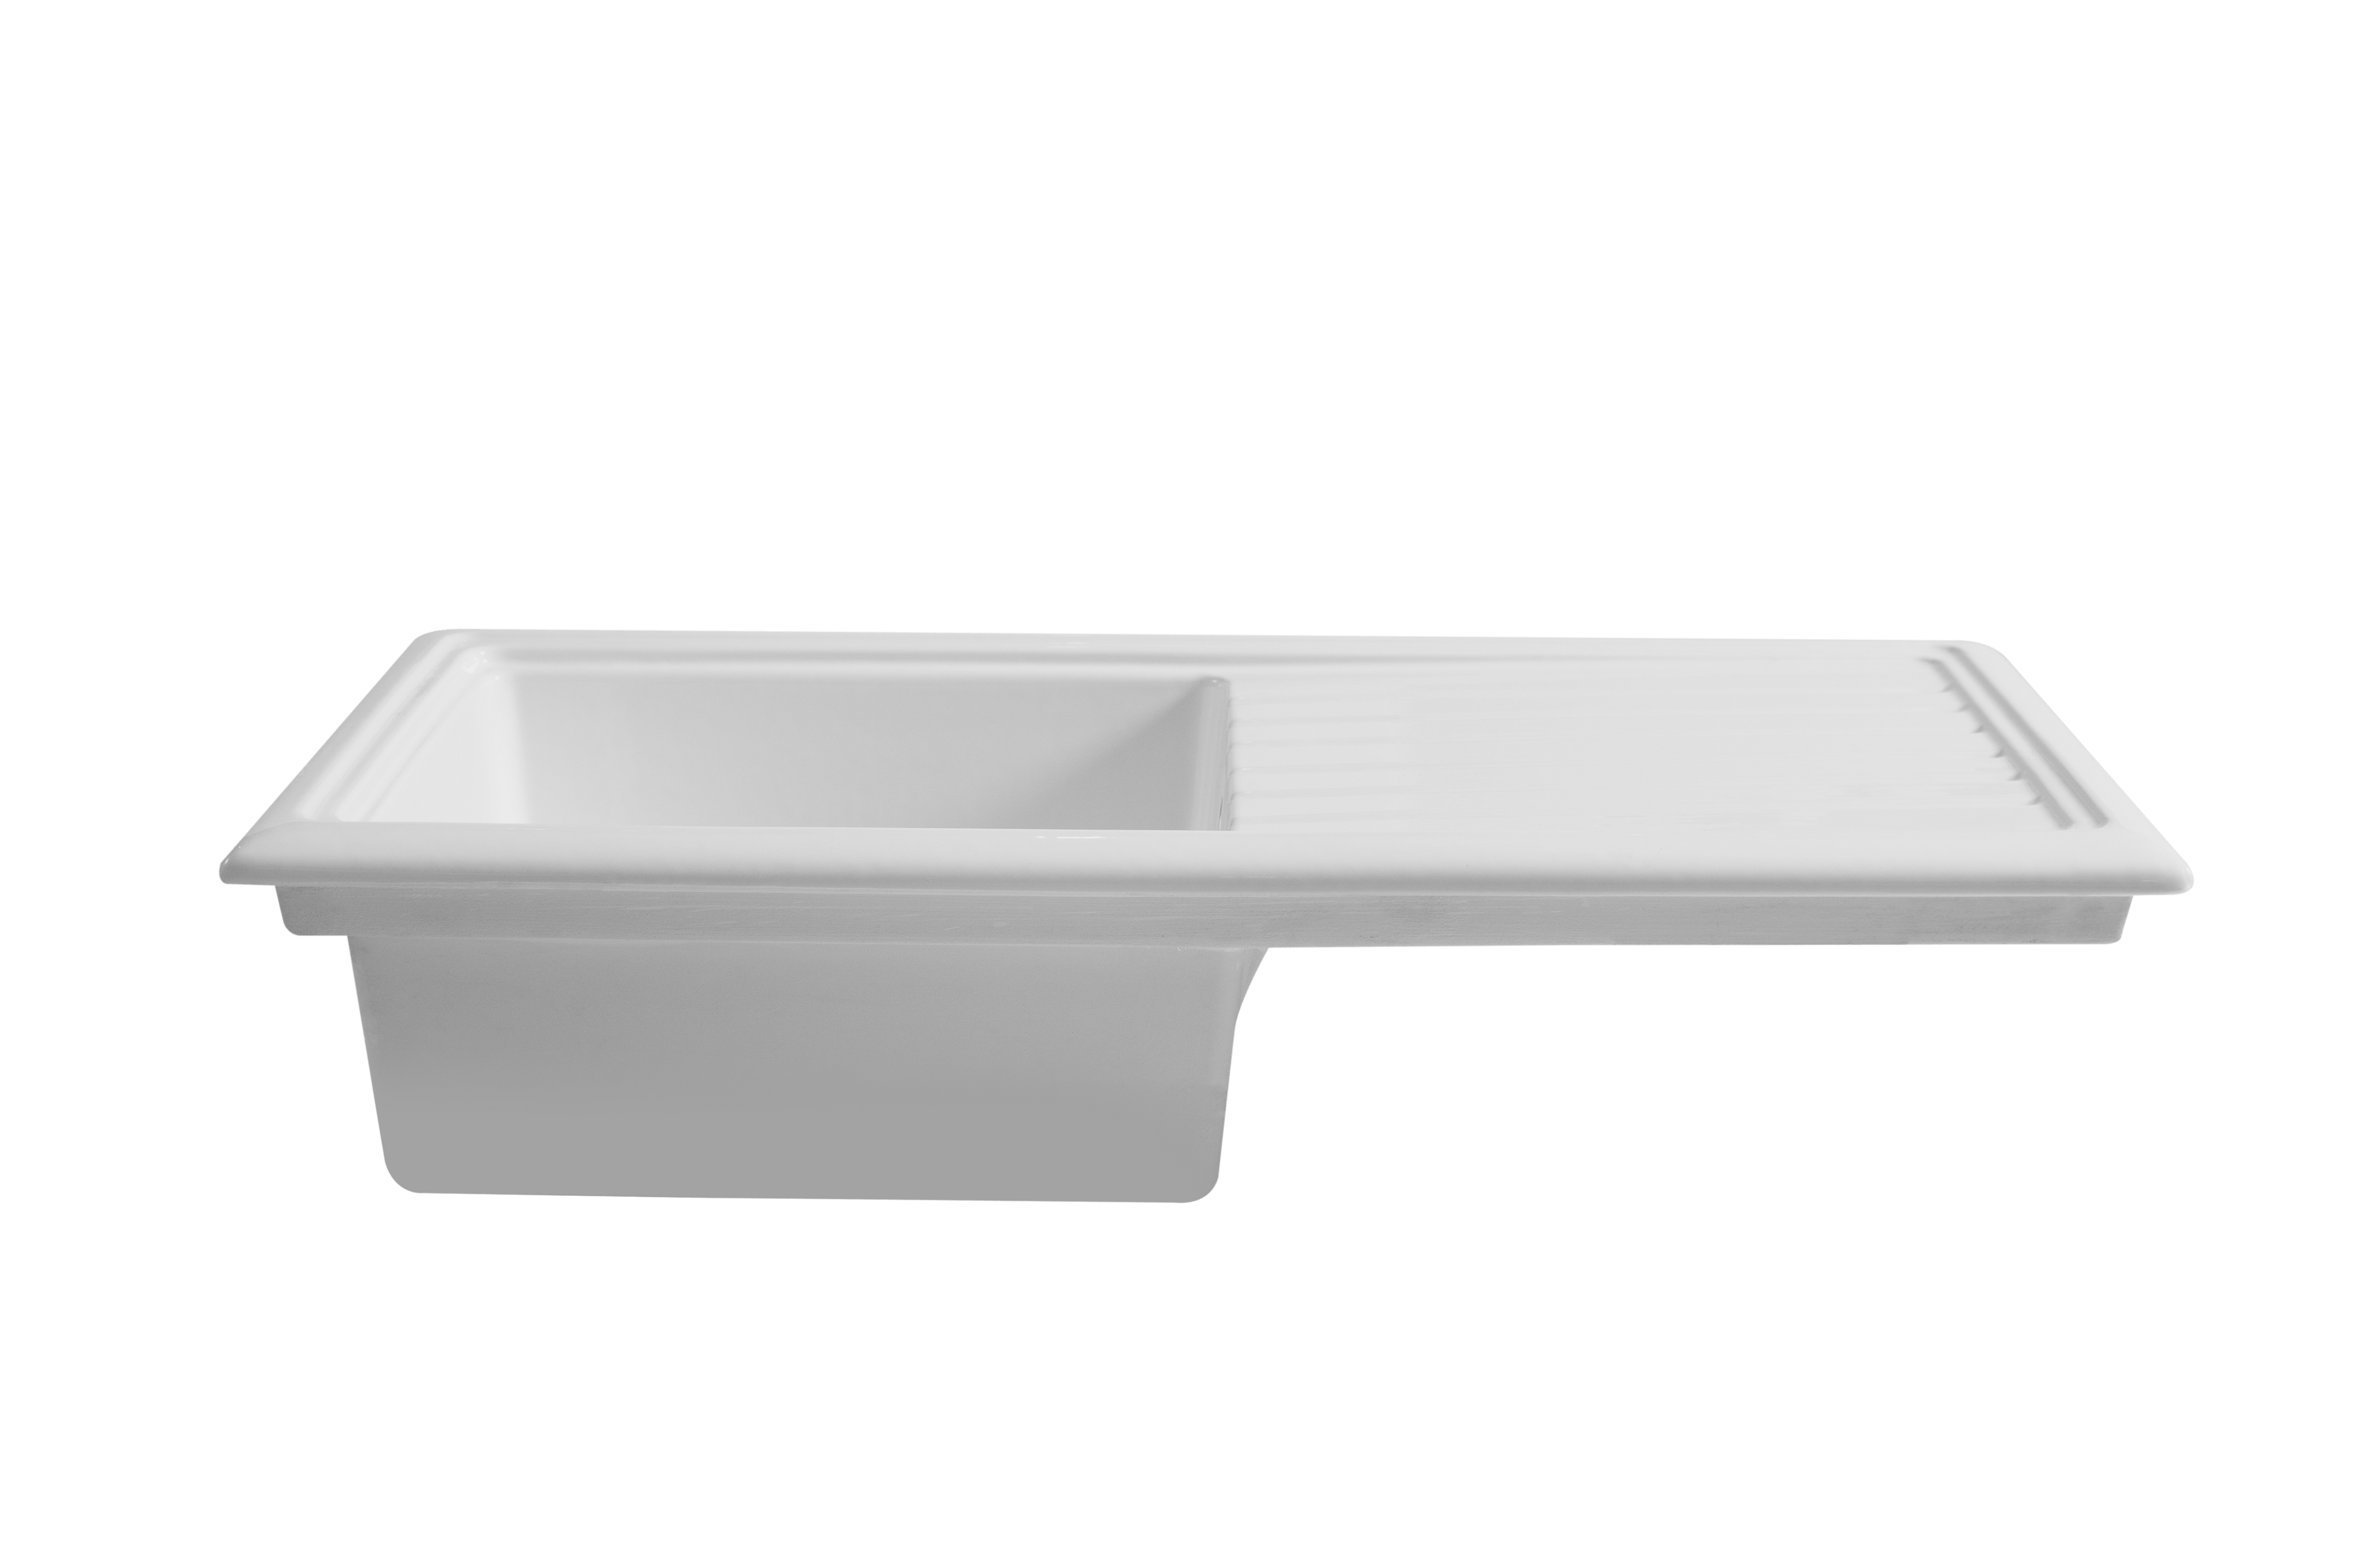 ceramic kitchen sink 2 tap holes